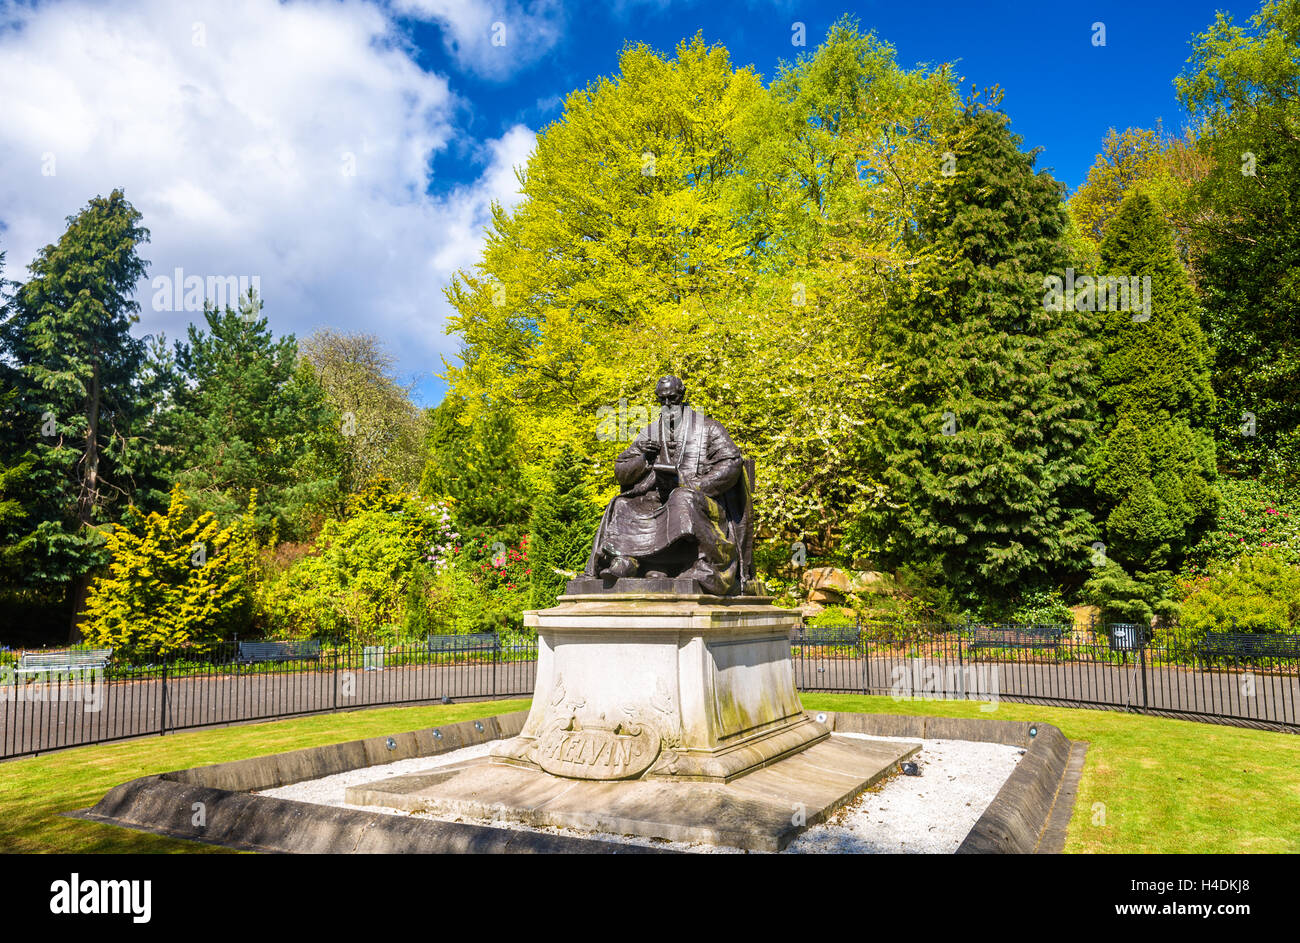 Statue of Lord Kelvin in Kelvingrove Park - Glasgow, Scotland Stock Photo